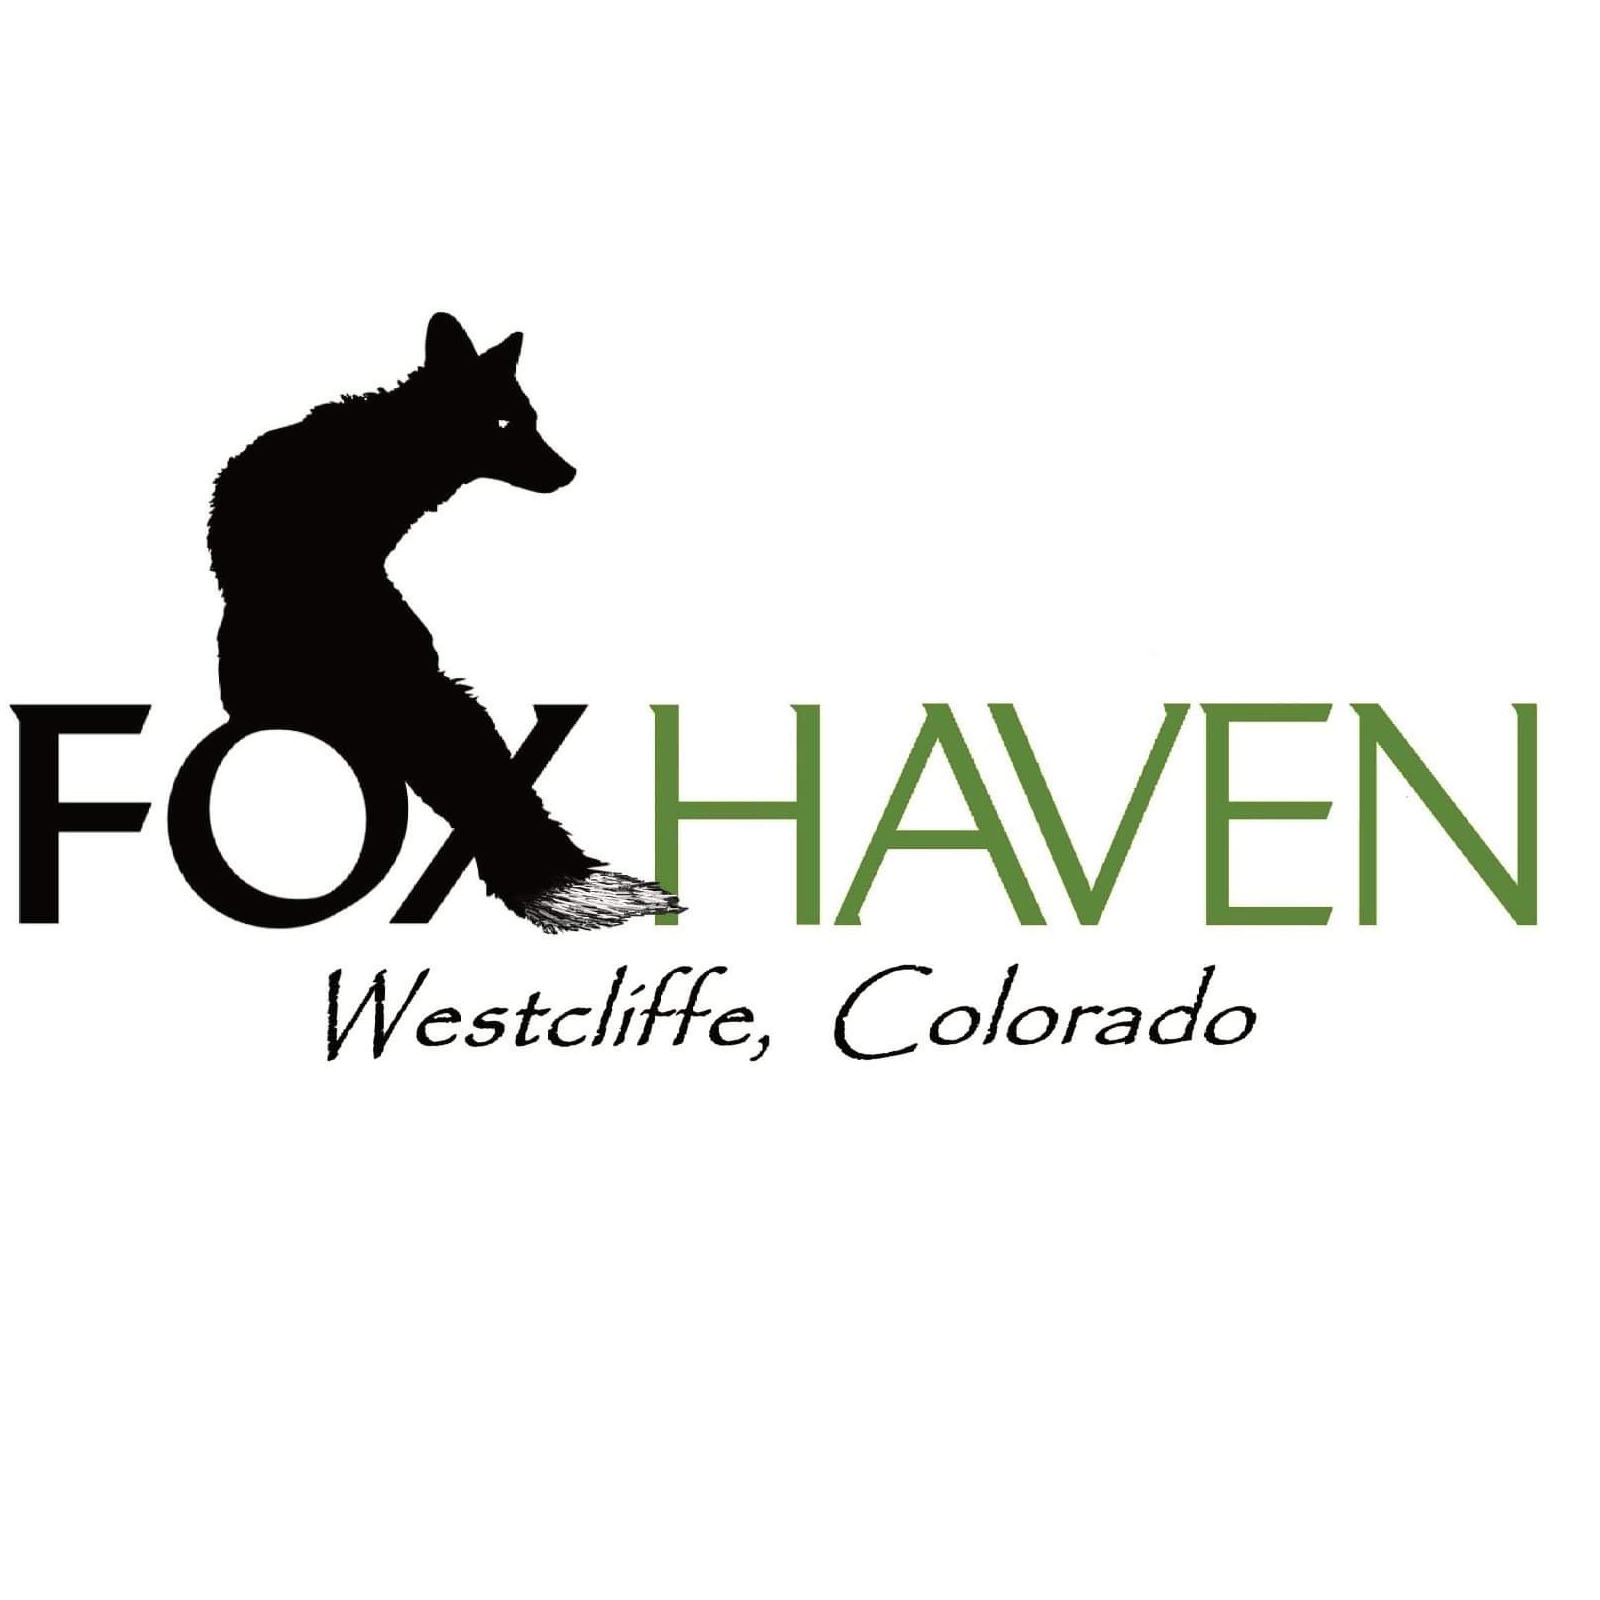 Foxhaven Farm